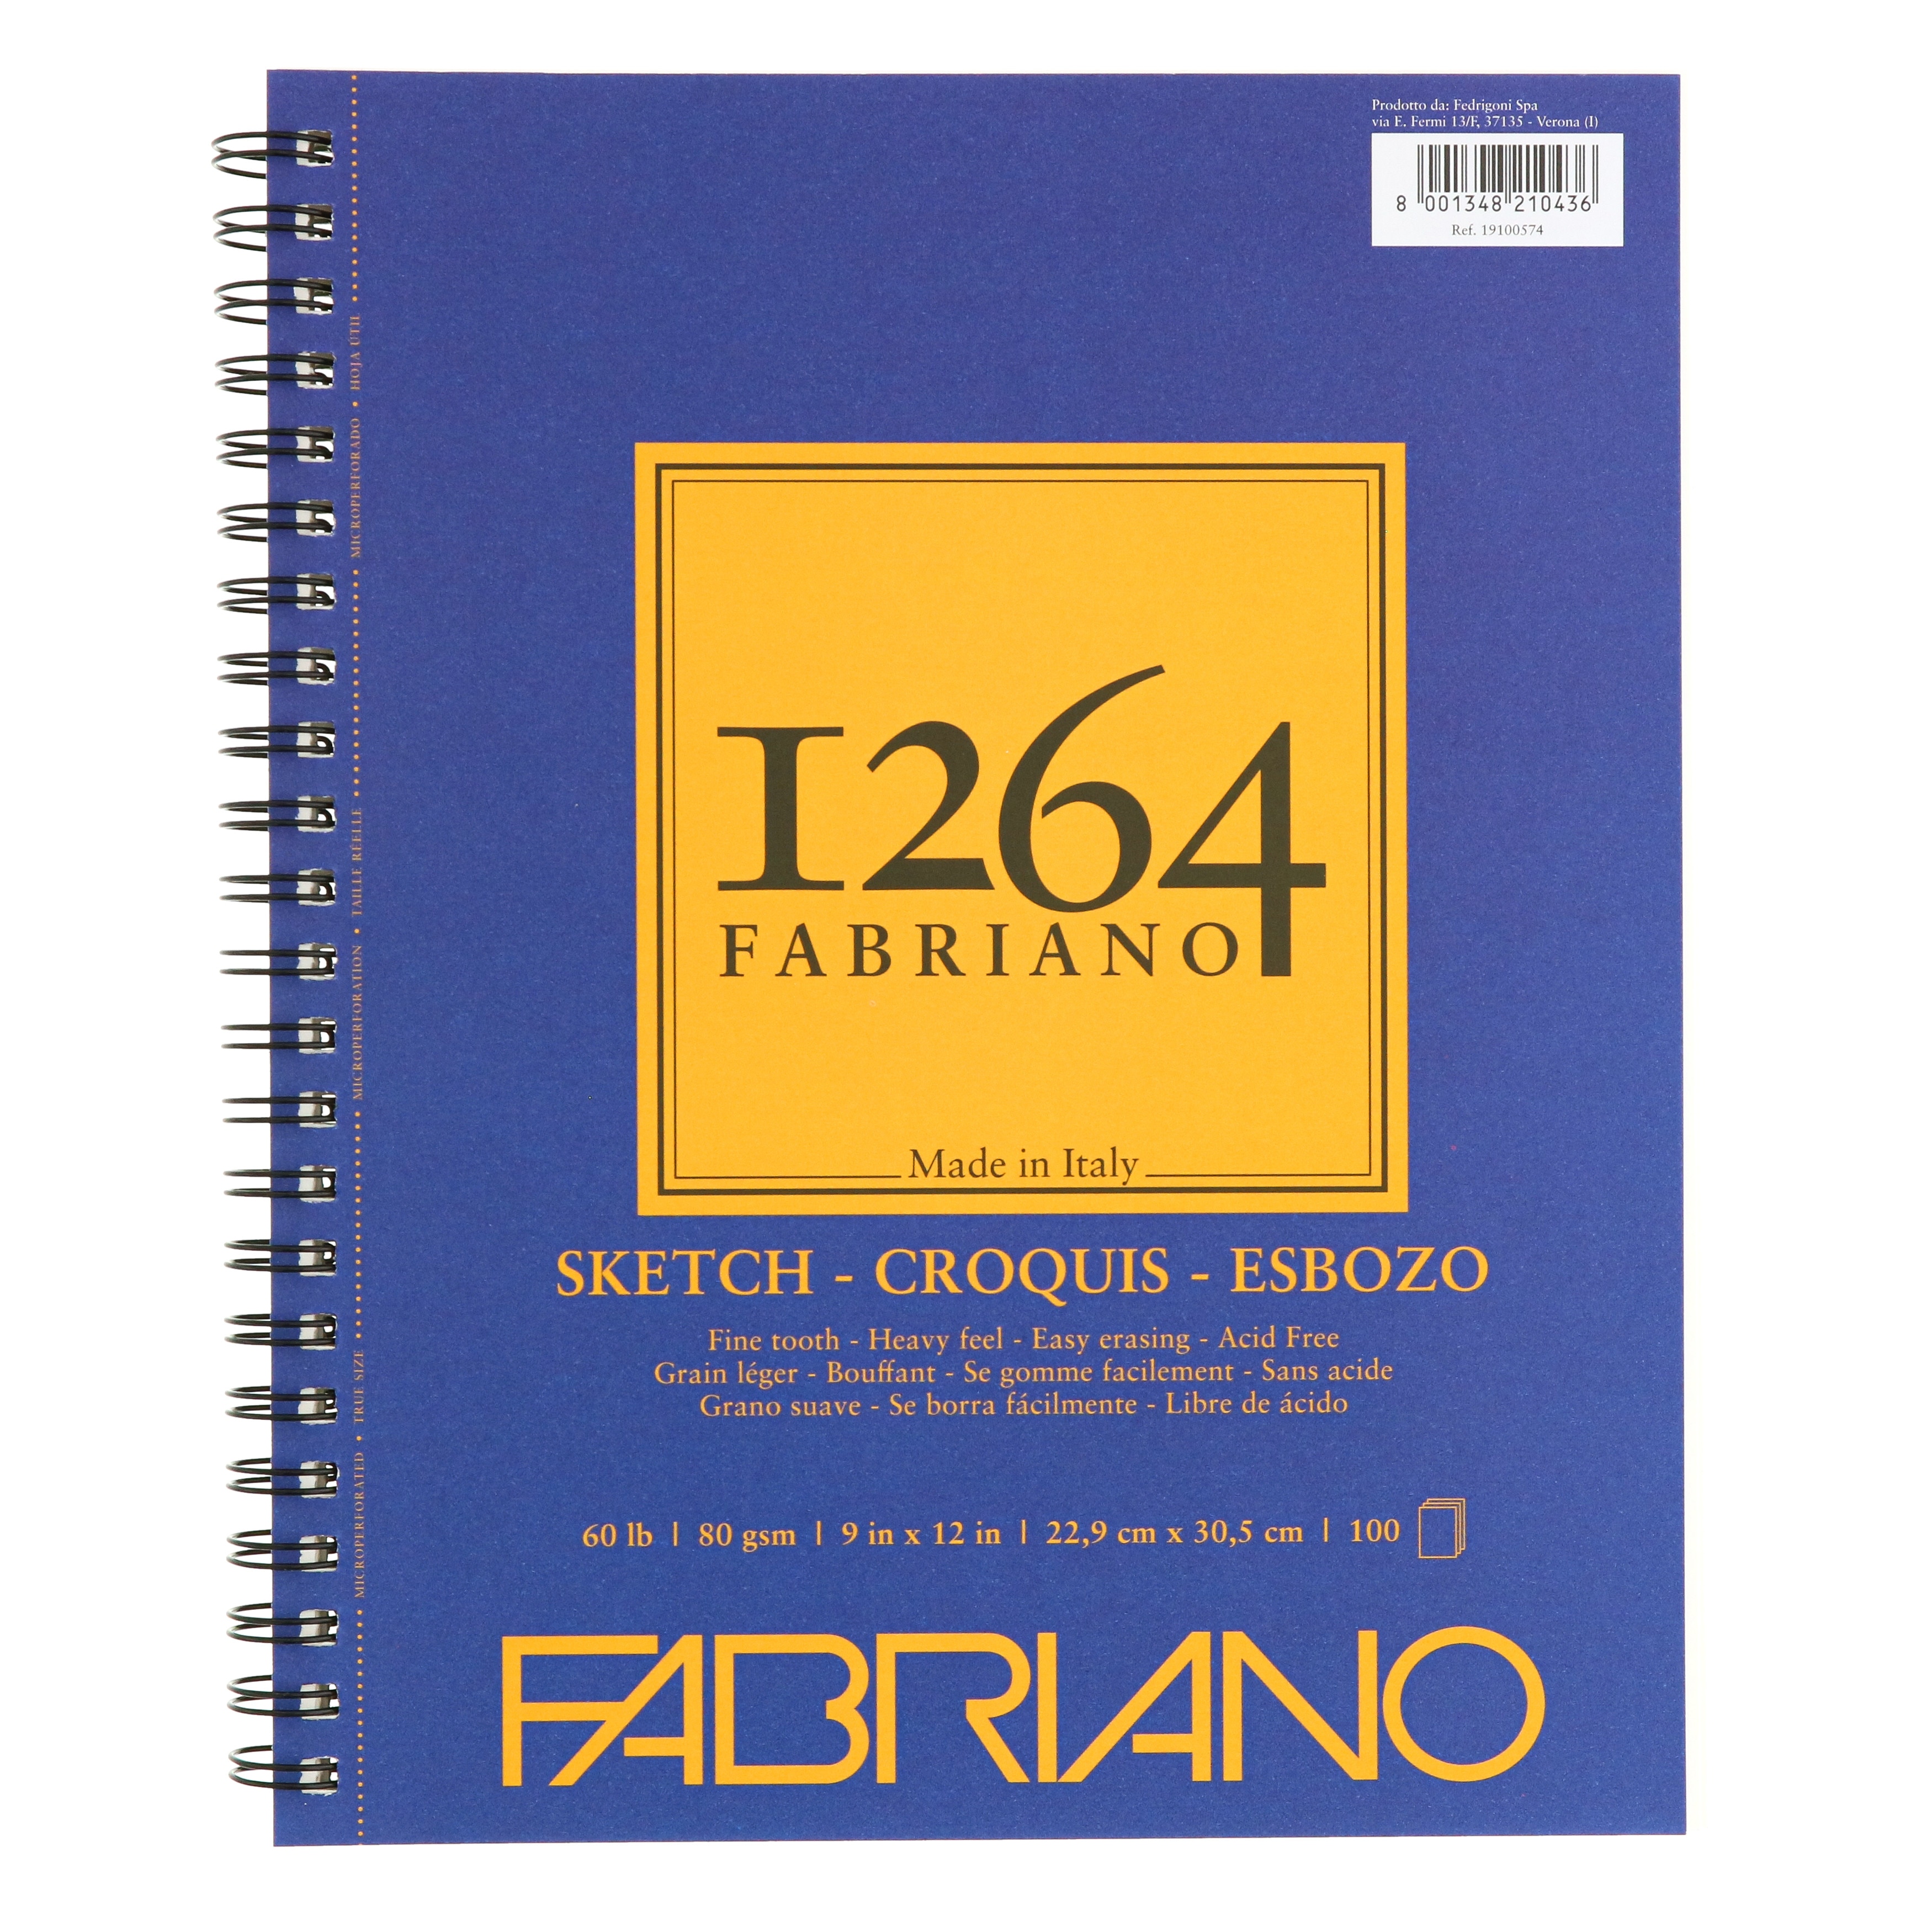 Fabriano 1264 Sketch Spiral bound Pad 9"x12"